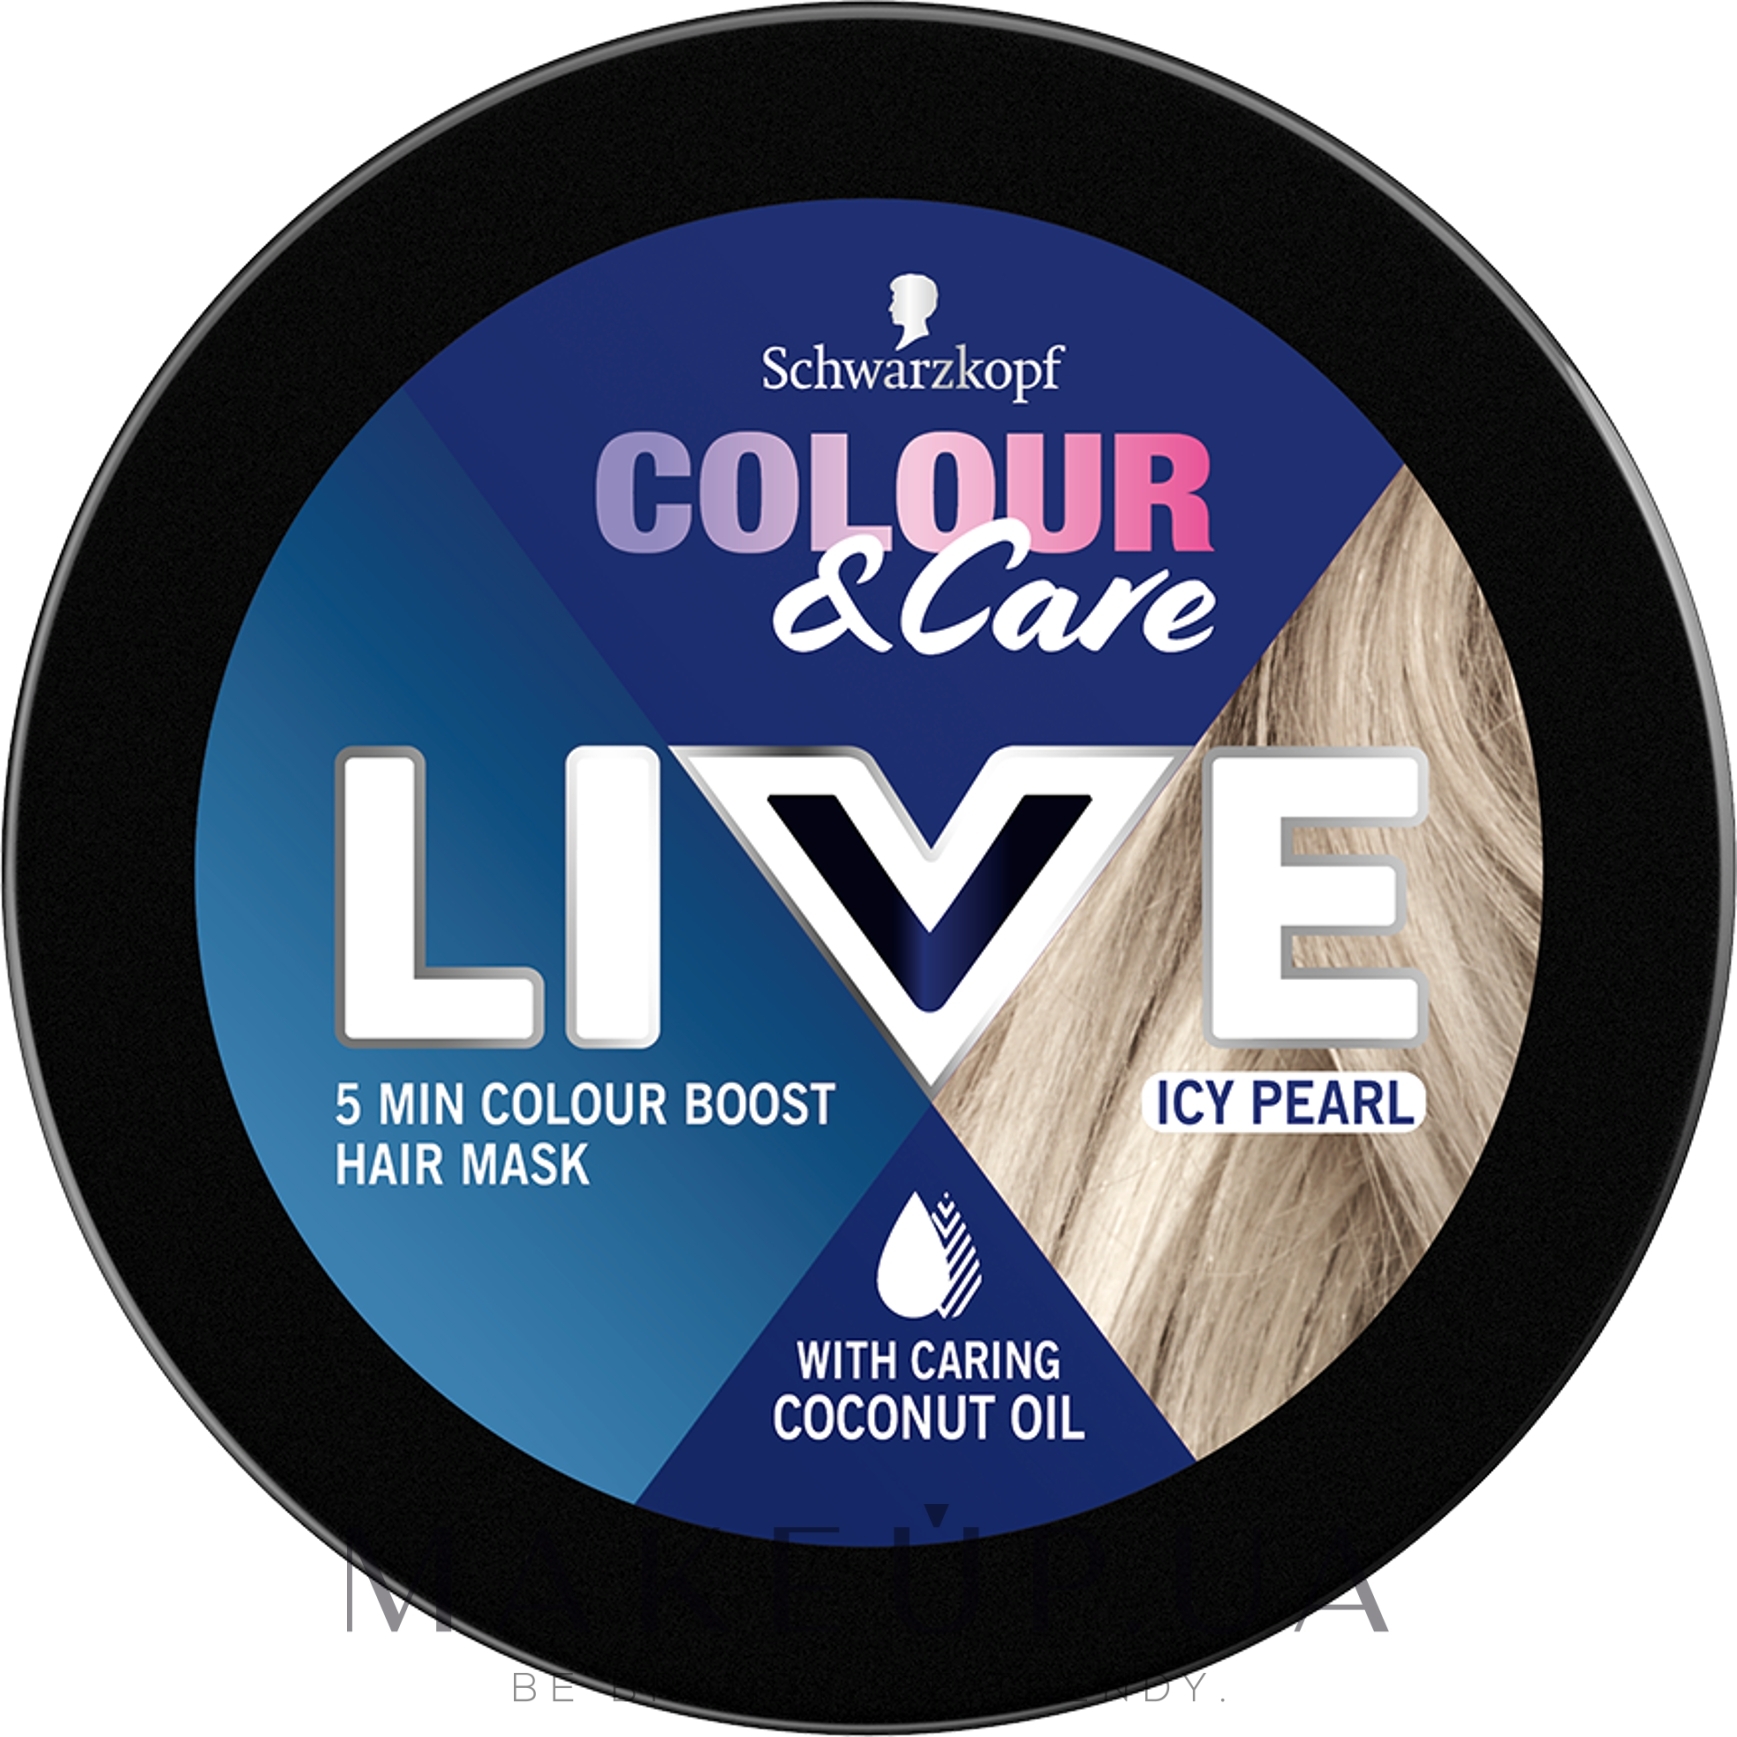 Напівперманентна 5-хвилинна маска для волосся - Schwarzkopf Live Colour & Care 5 Minute Hair Mask — фото Icy Pearl